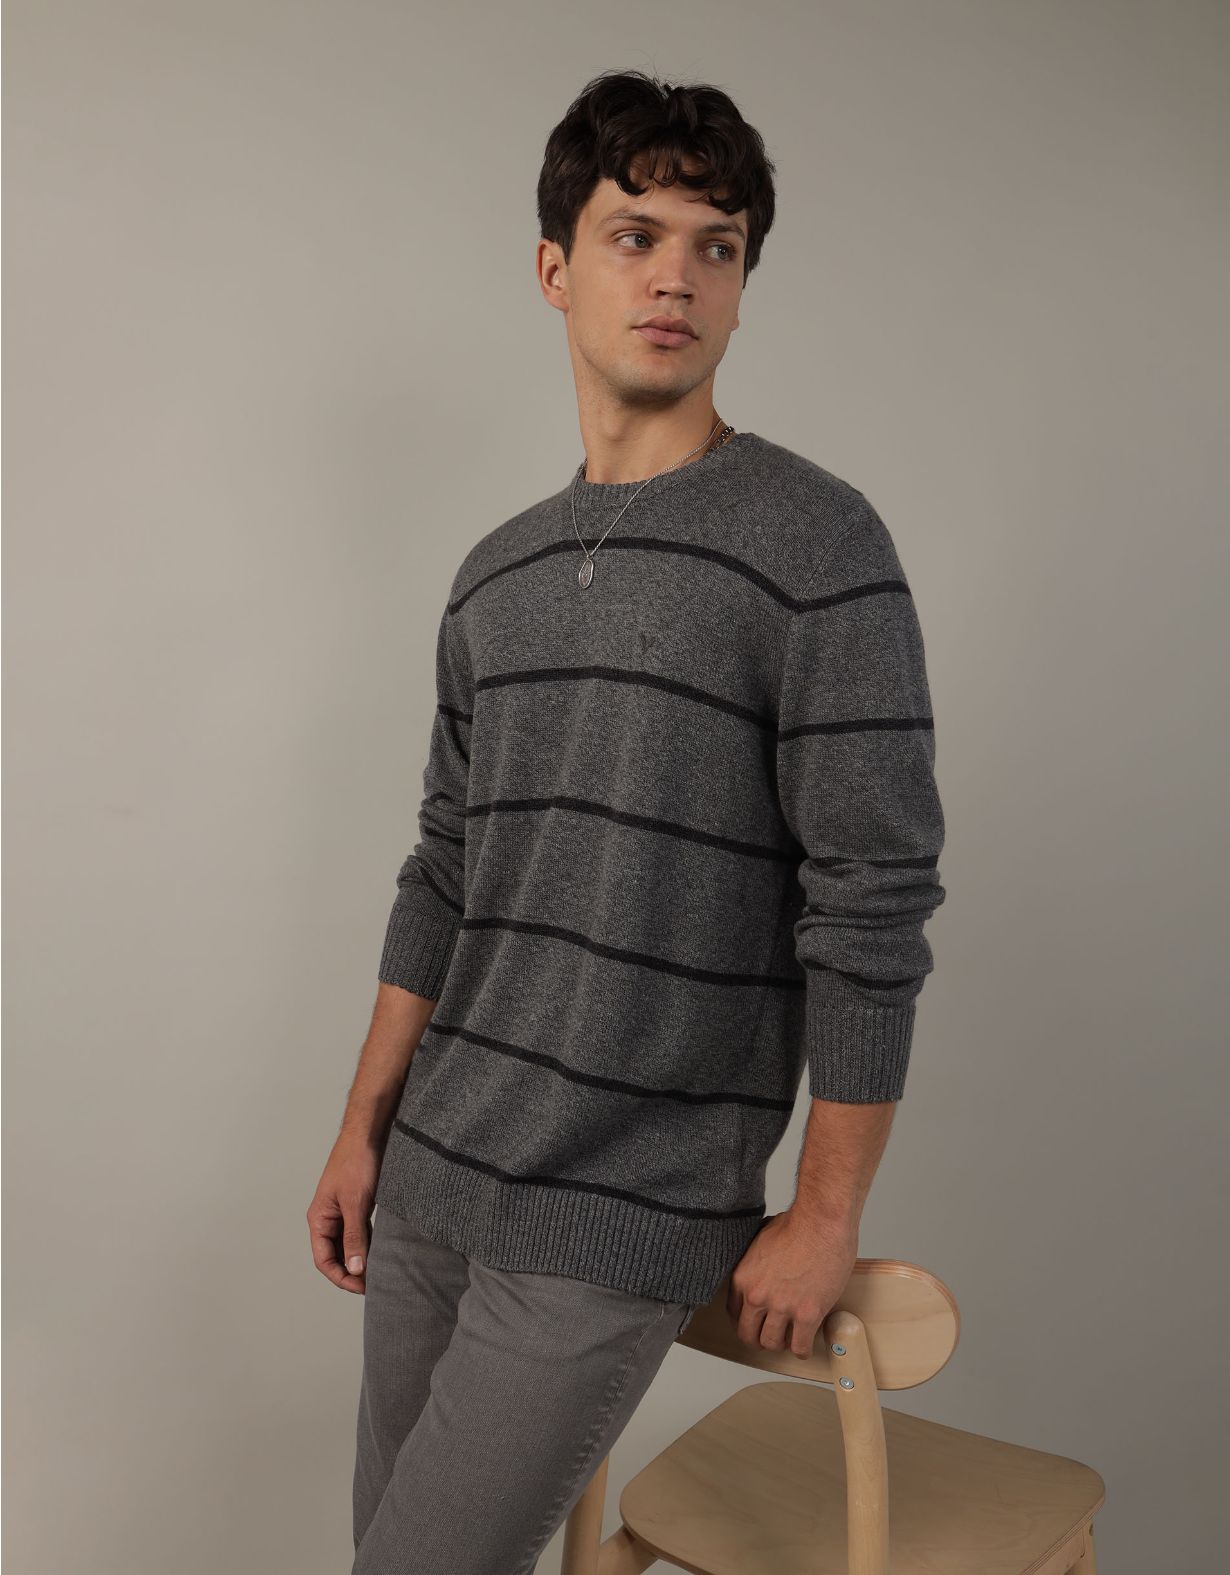 AE Striped Crewneck Sweater